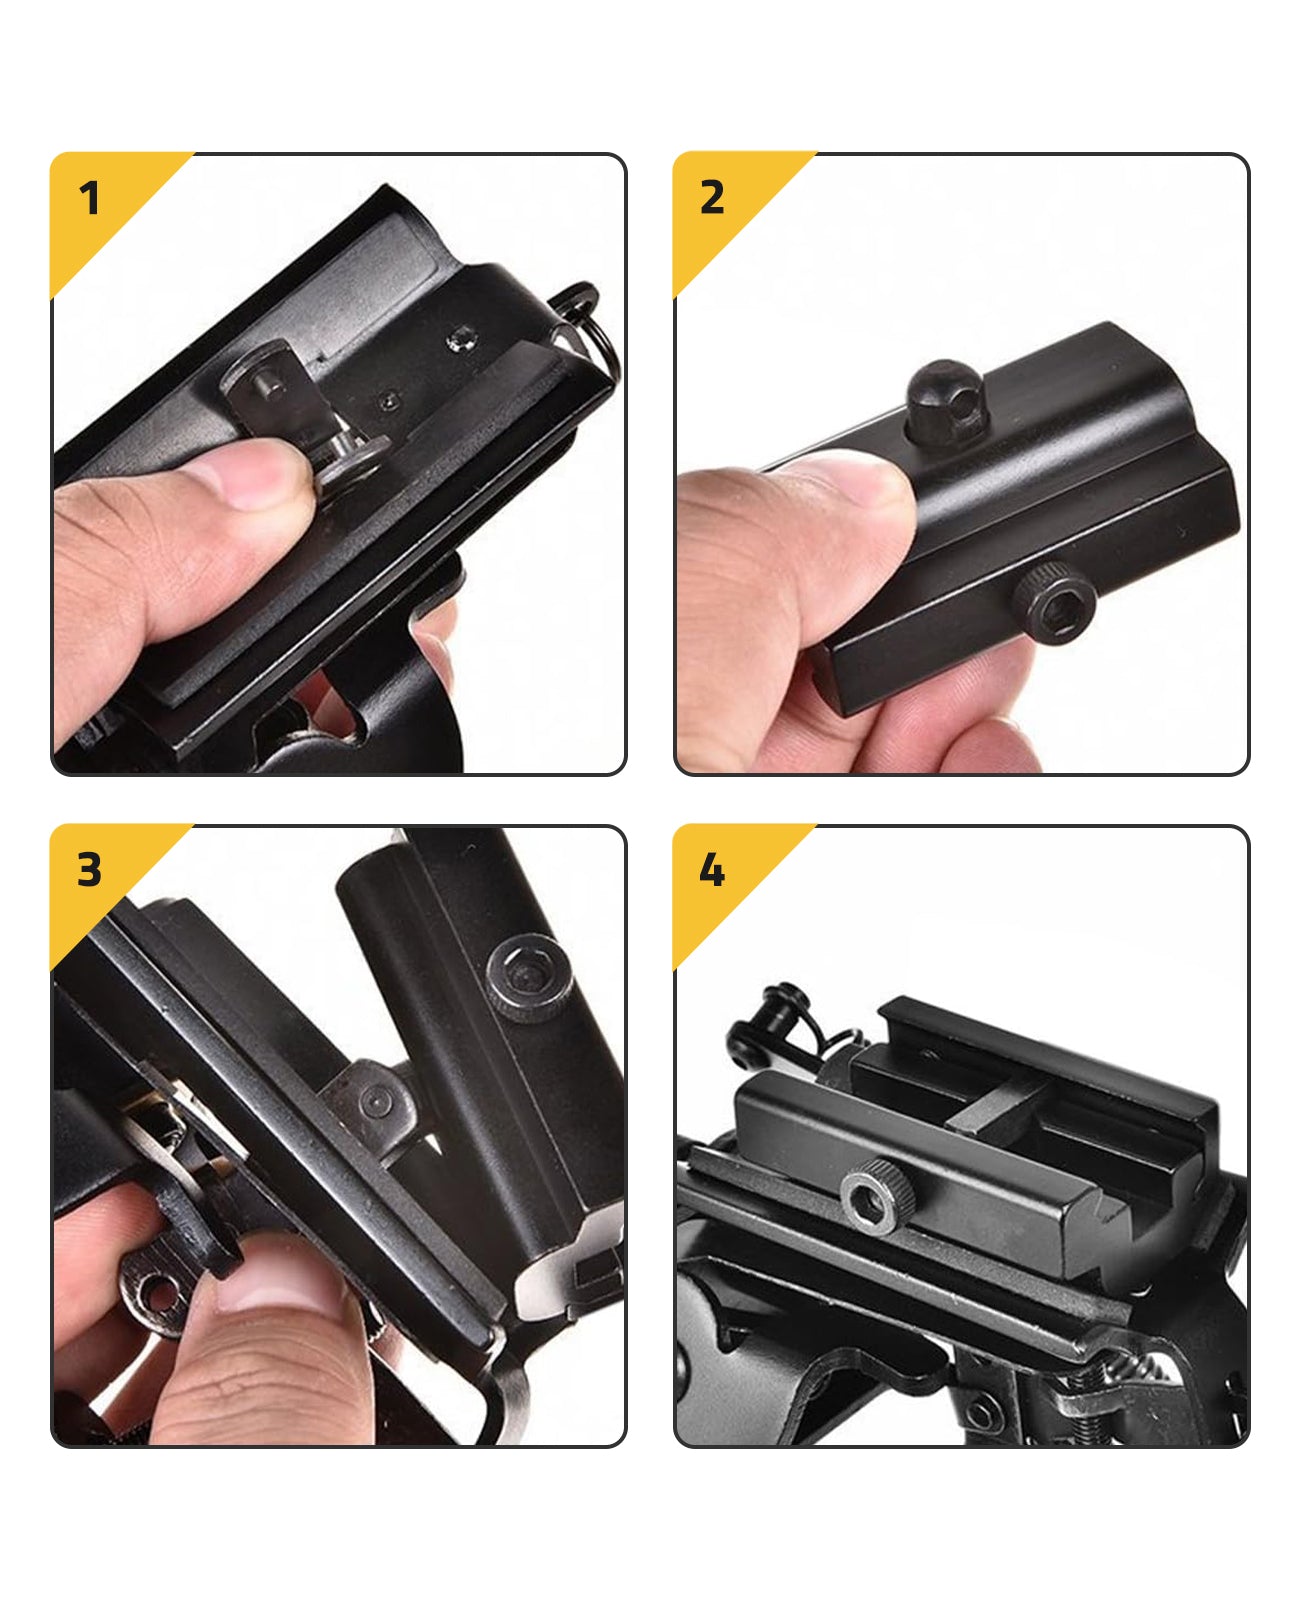 CVLIFE Bipod 9-13 Inches Rifle Bipod for Picatinny and M-rail